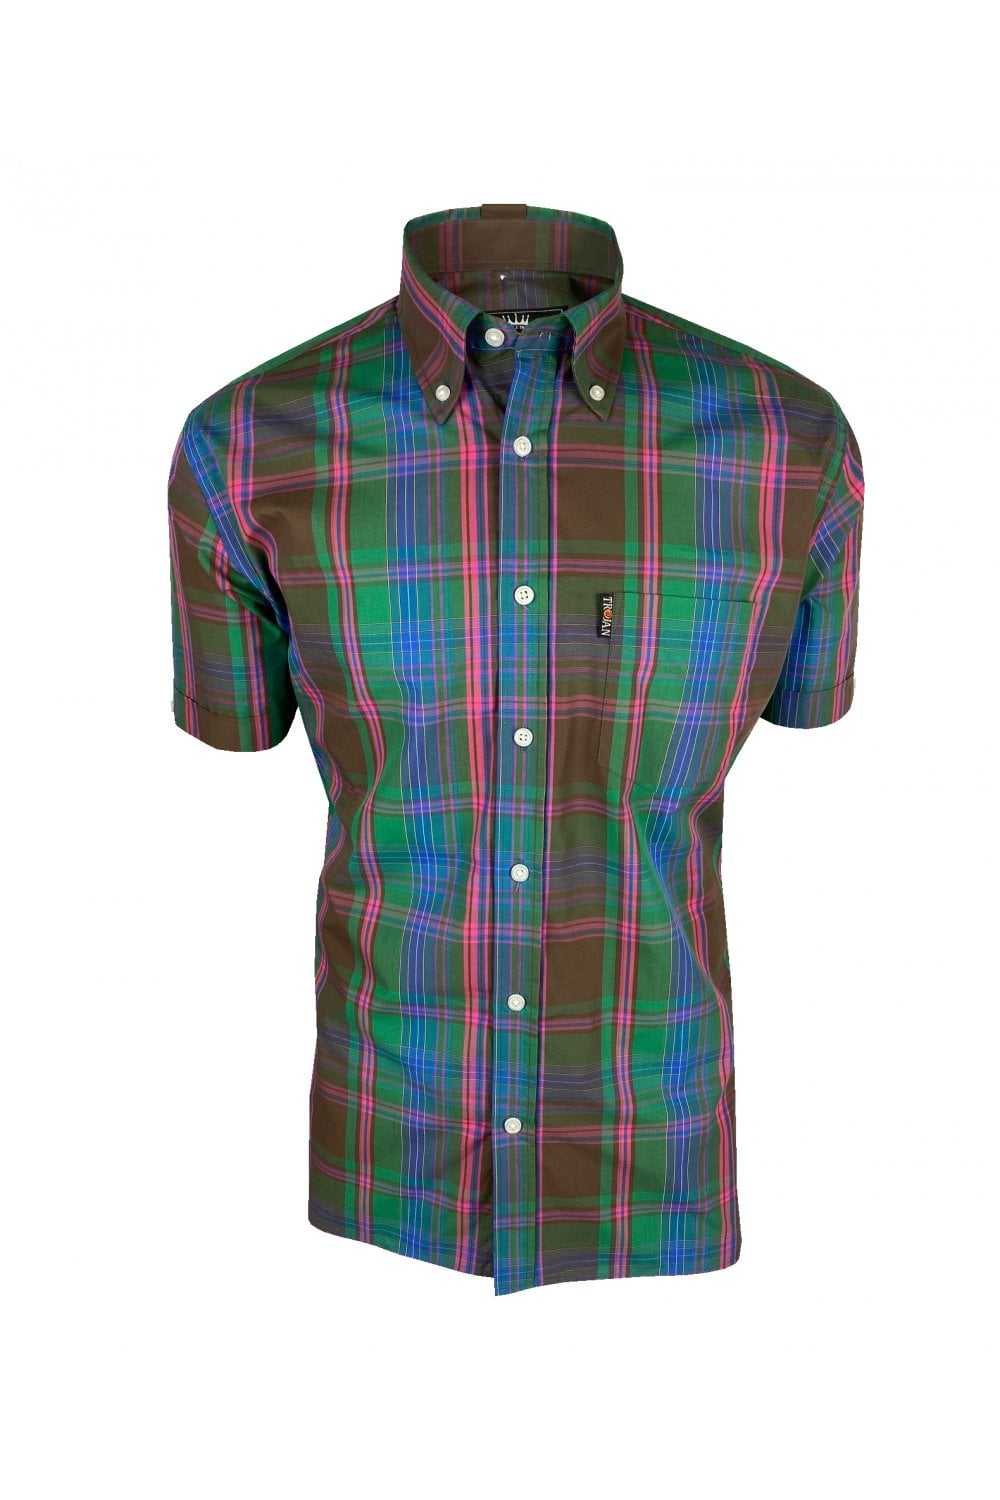 Trojan Check SS Shirt With Free Matching Pocket Square TC/1005 Green - Raw Menswear